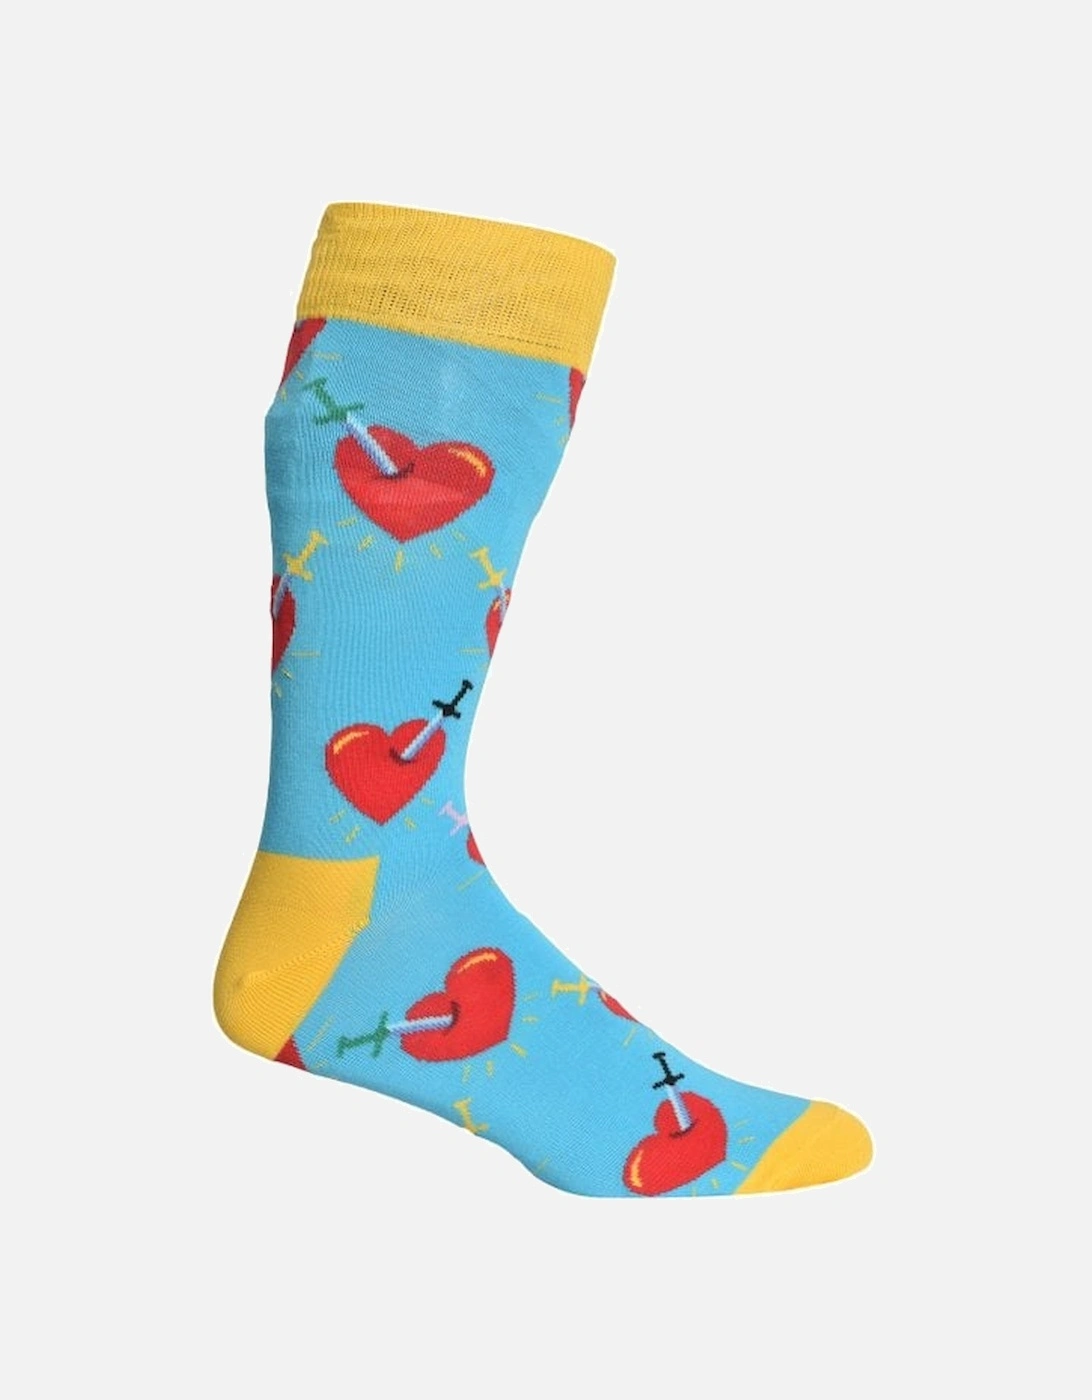 Broken Heart Socks, Blue/yellow/red